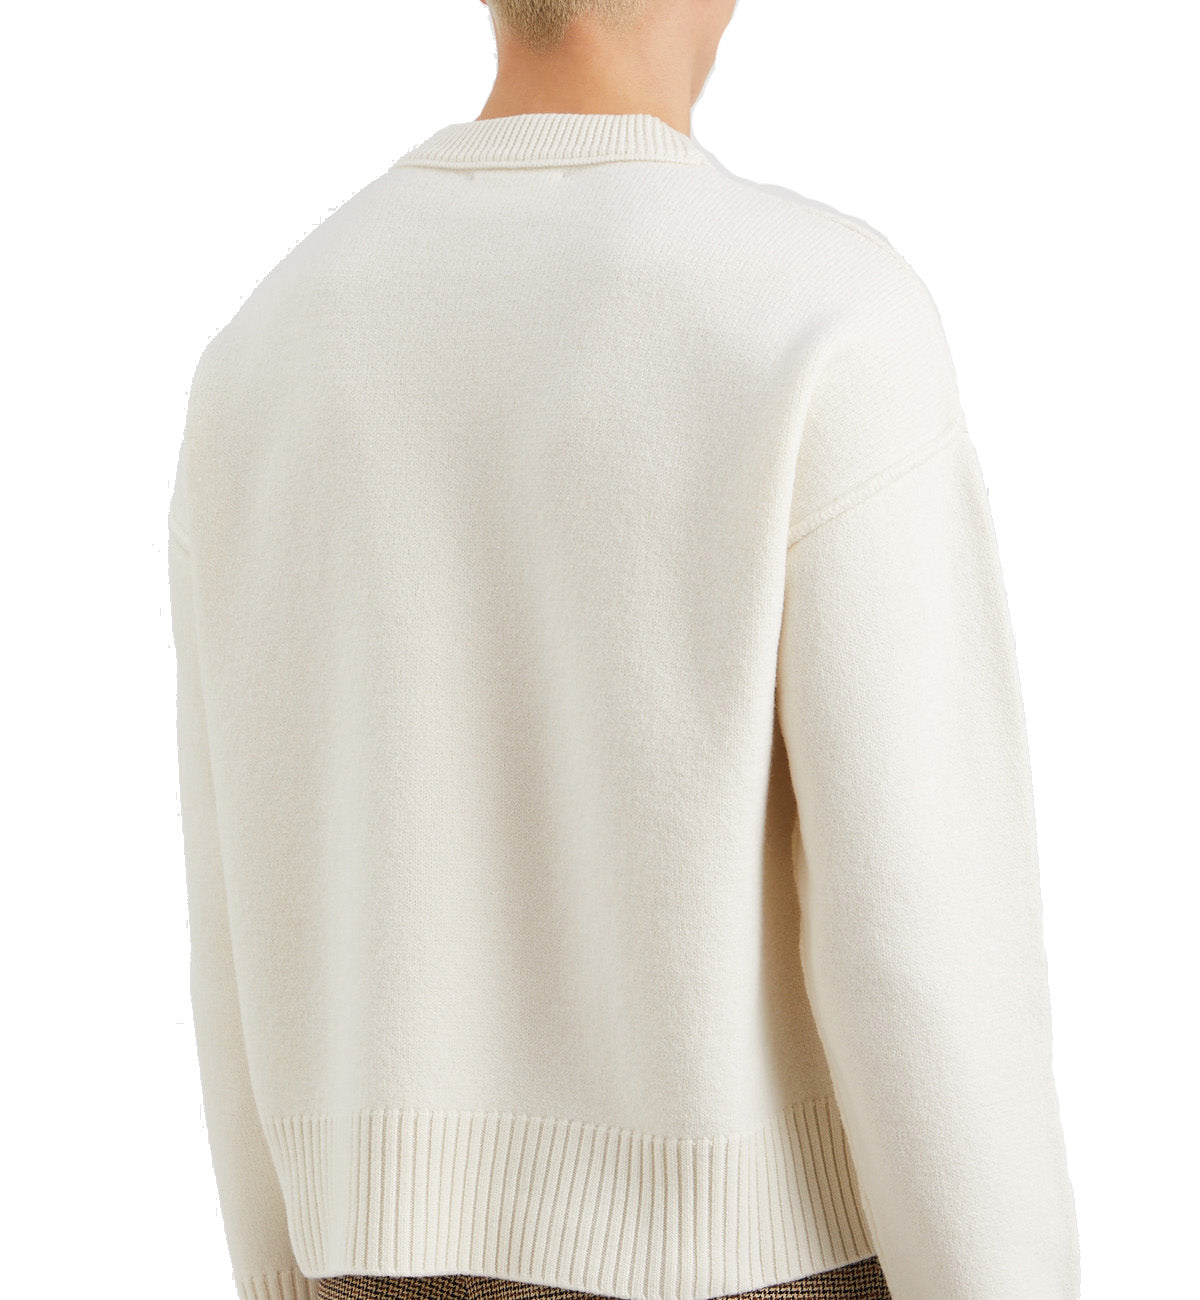 Ami Paris Sweater (White)